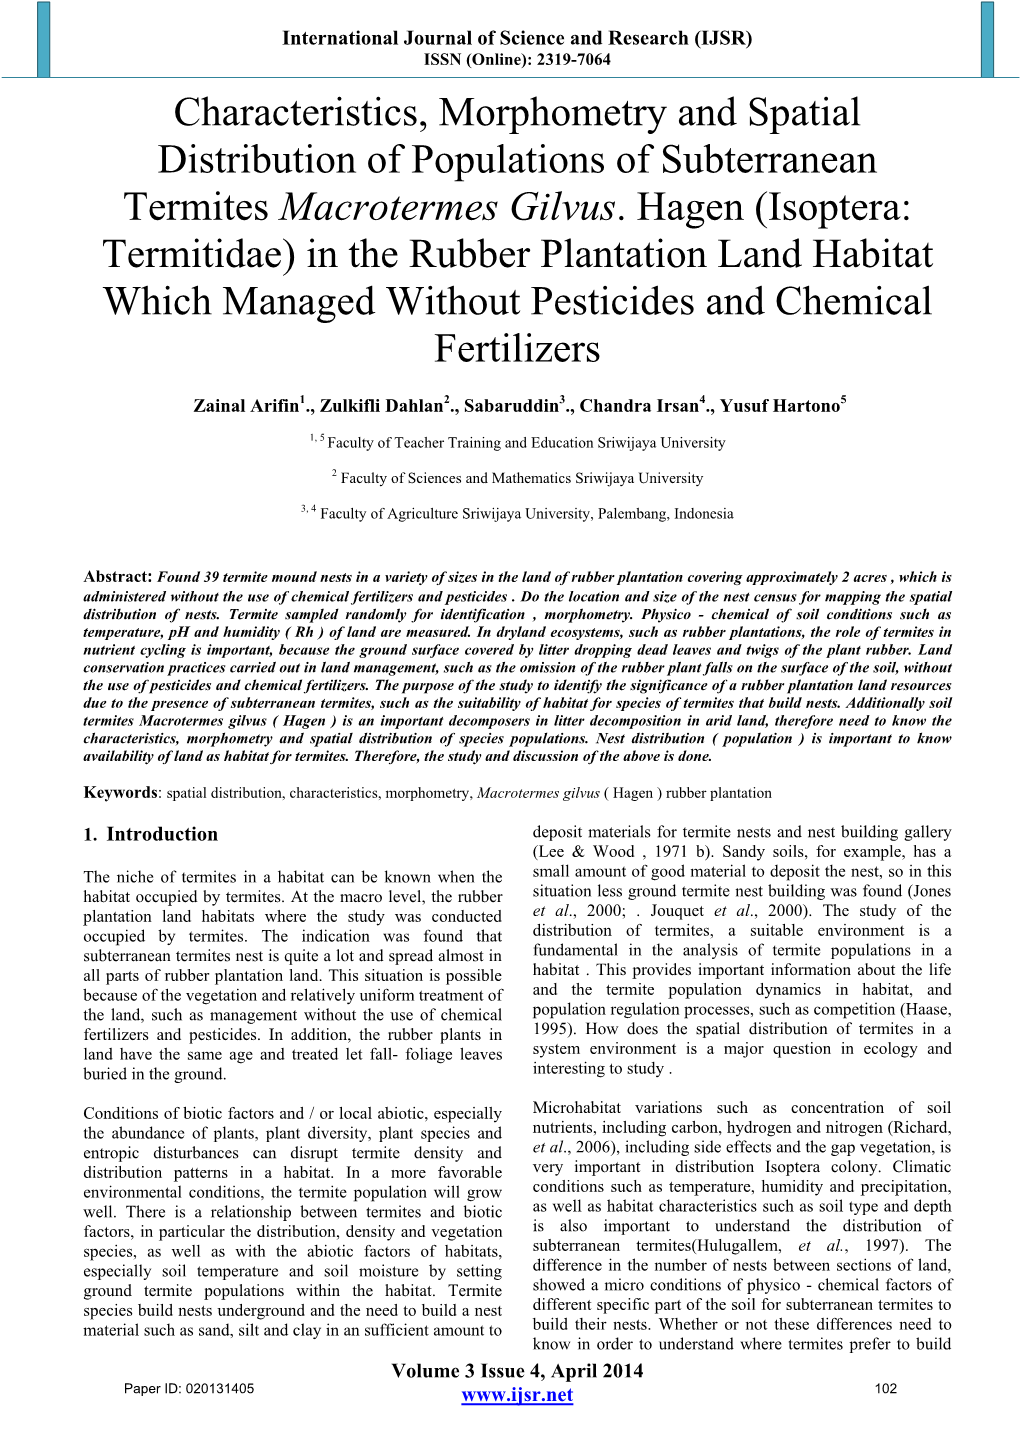 Characteristics, Morphometry and Spatial Distribution of Populations of Subterranean Termites Macrotermes Gilvus